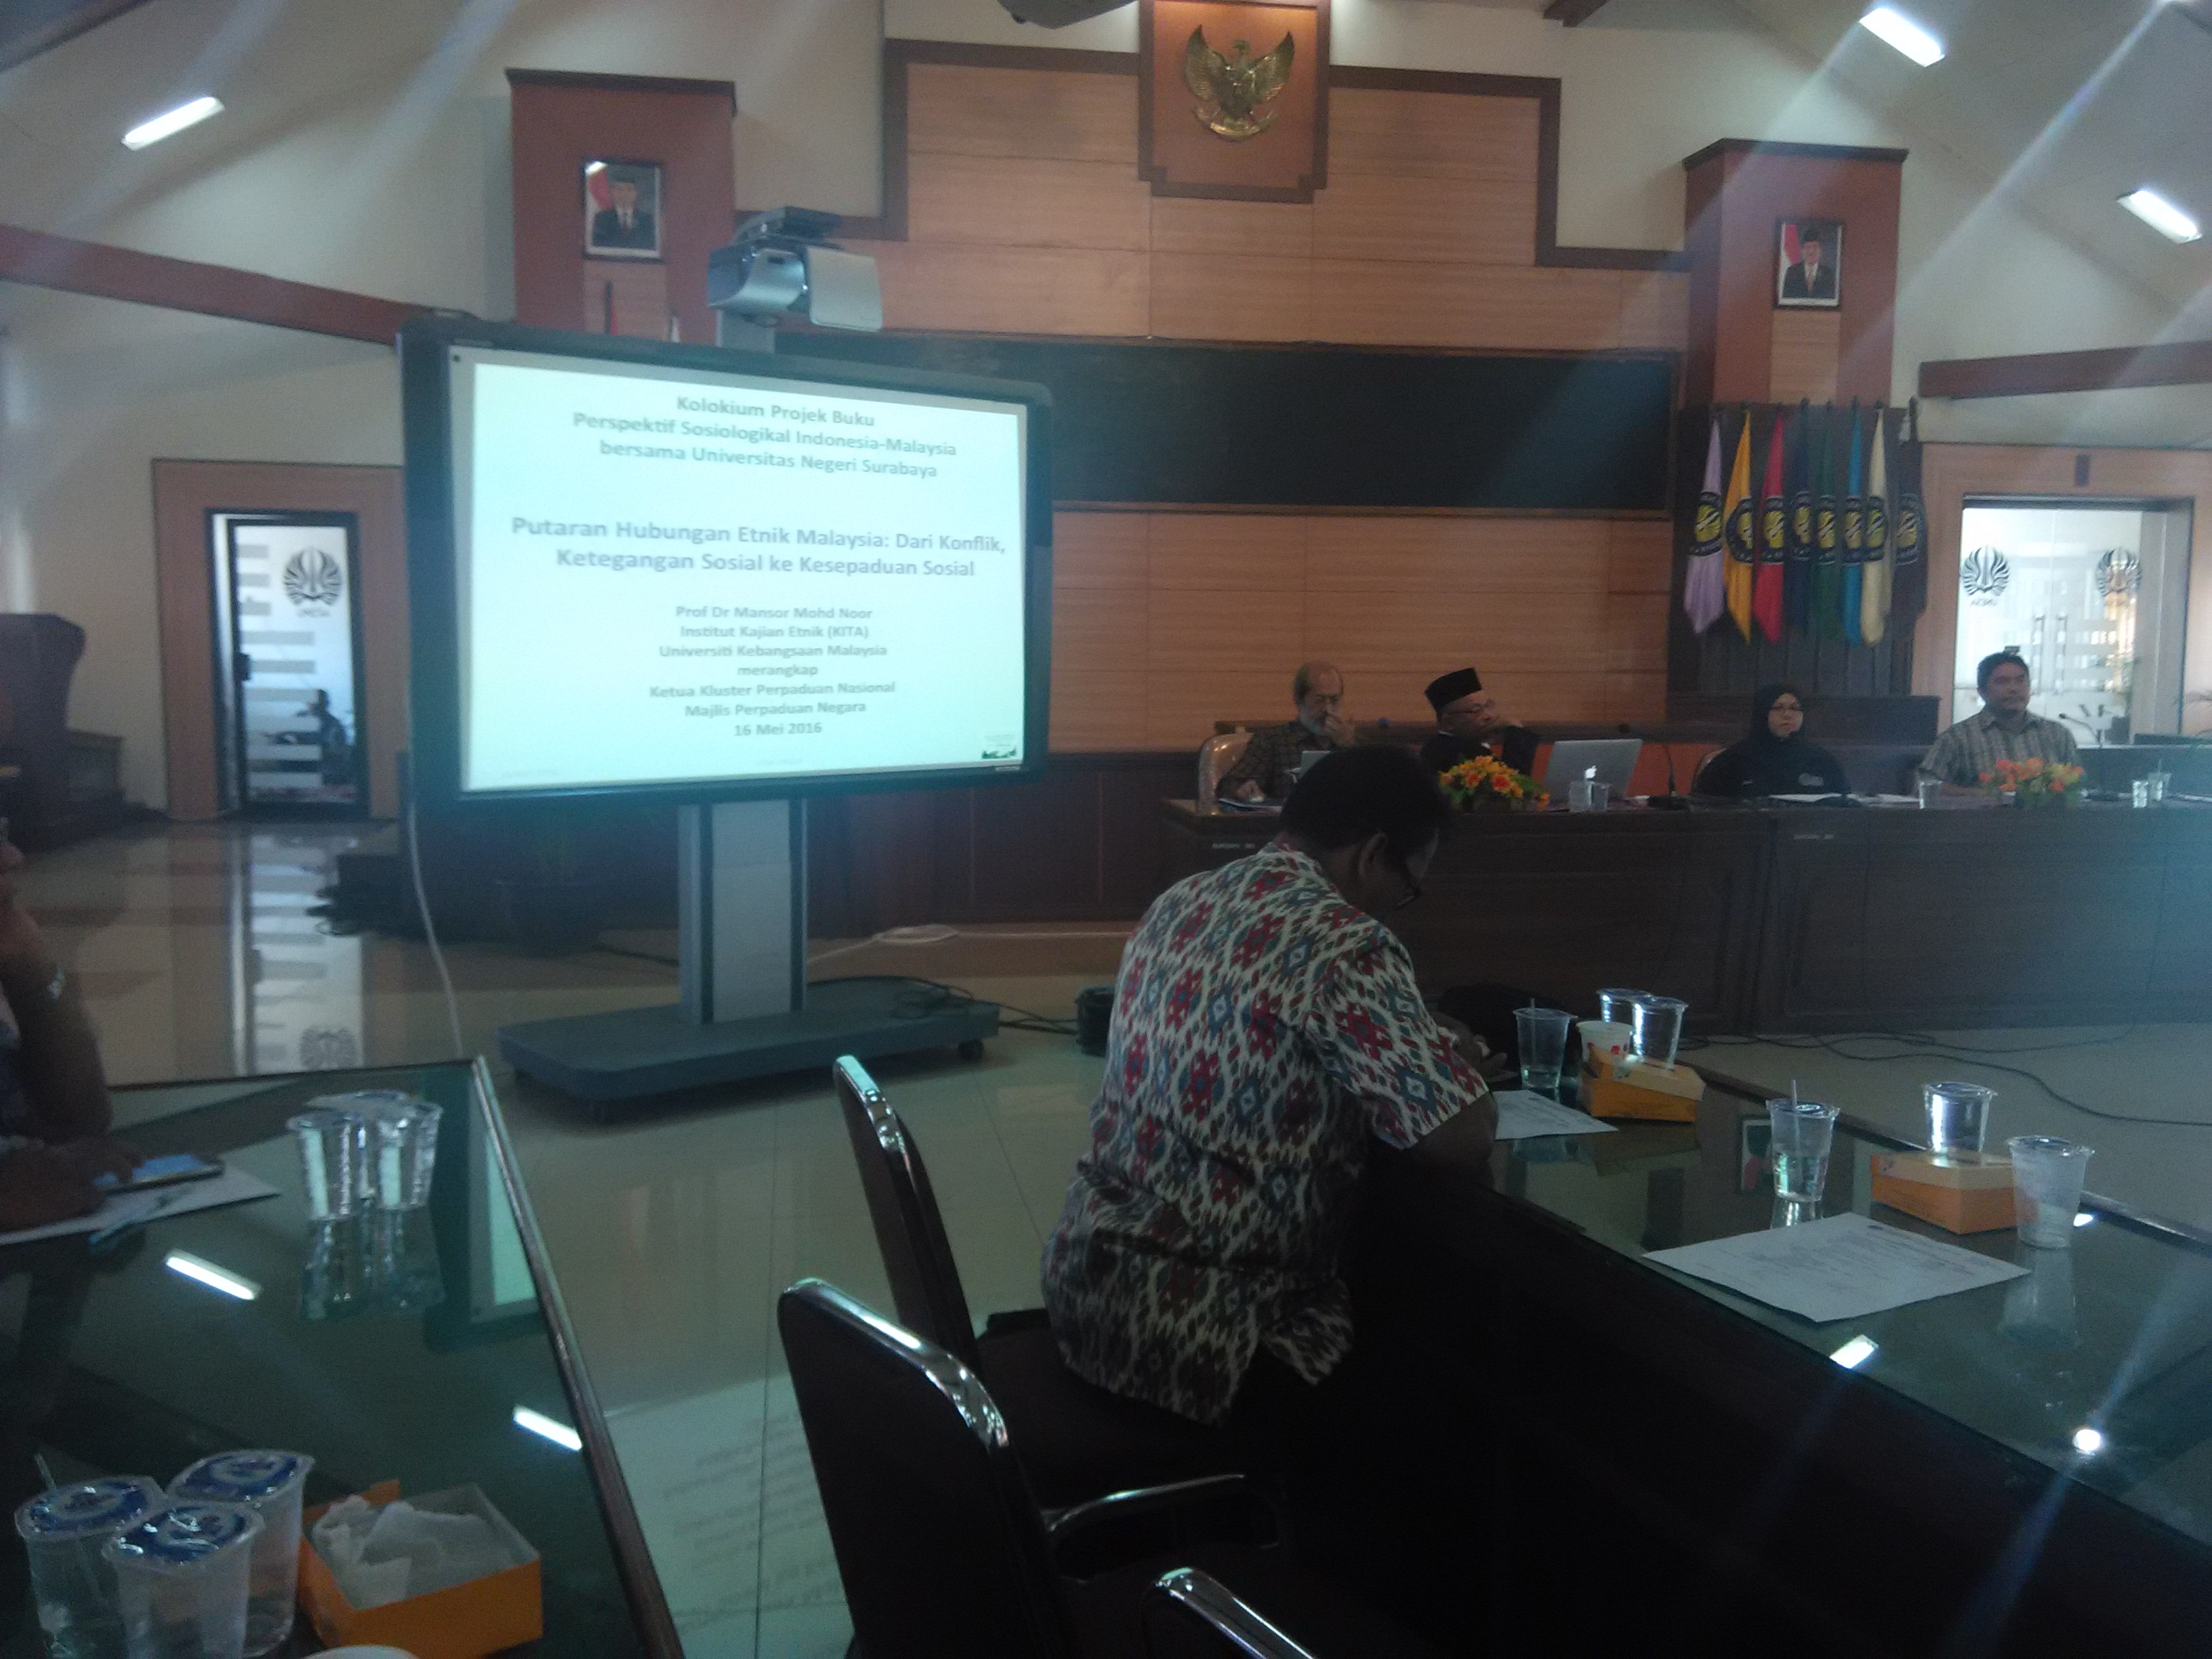 Kolokium Kajian Sosiologi Indonesia Malaysia